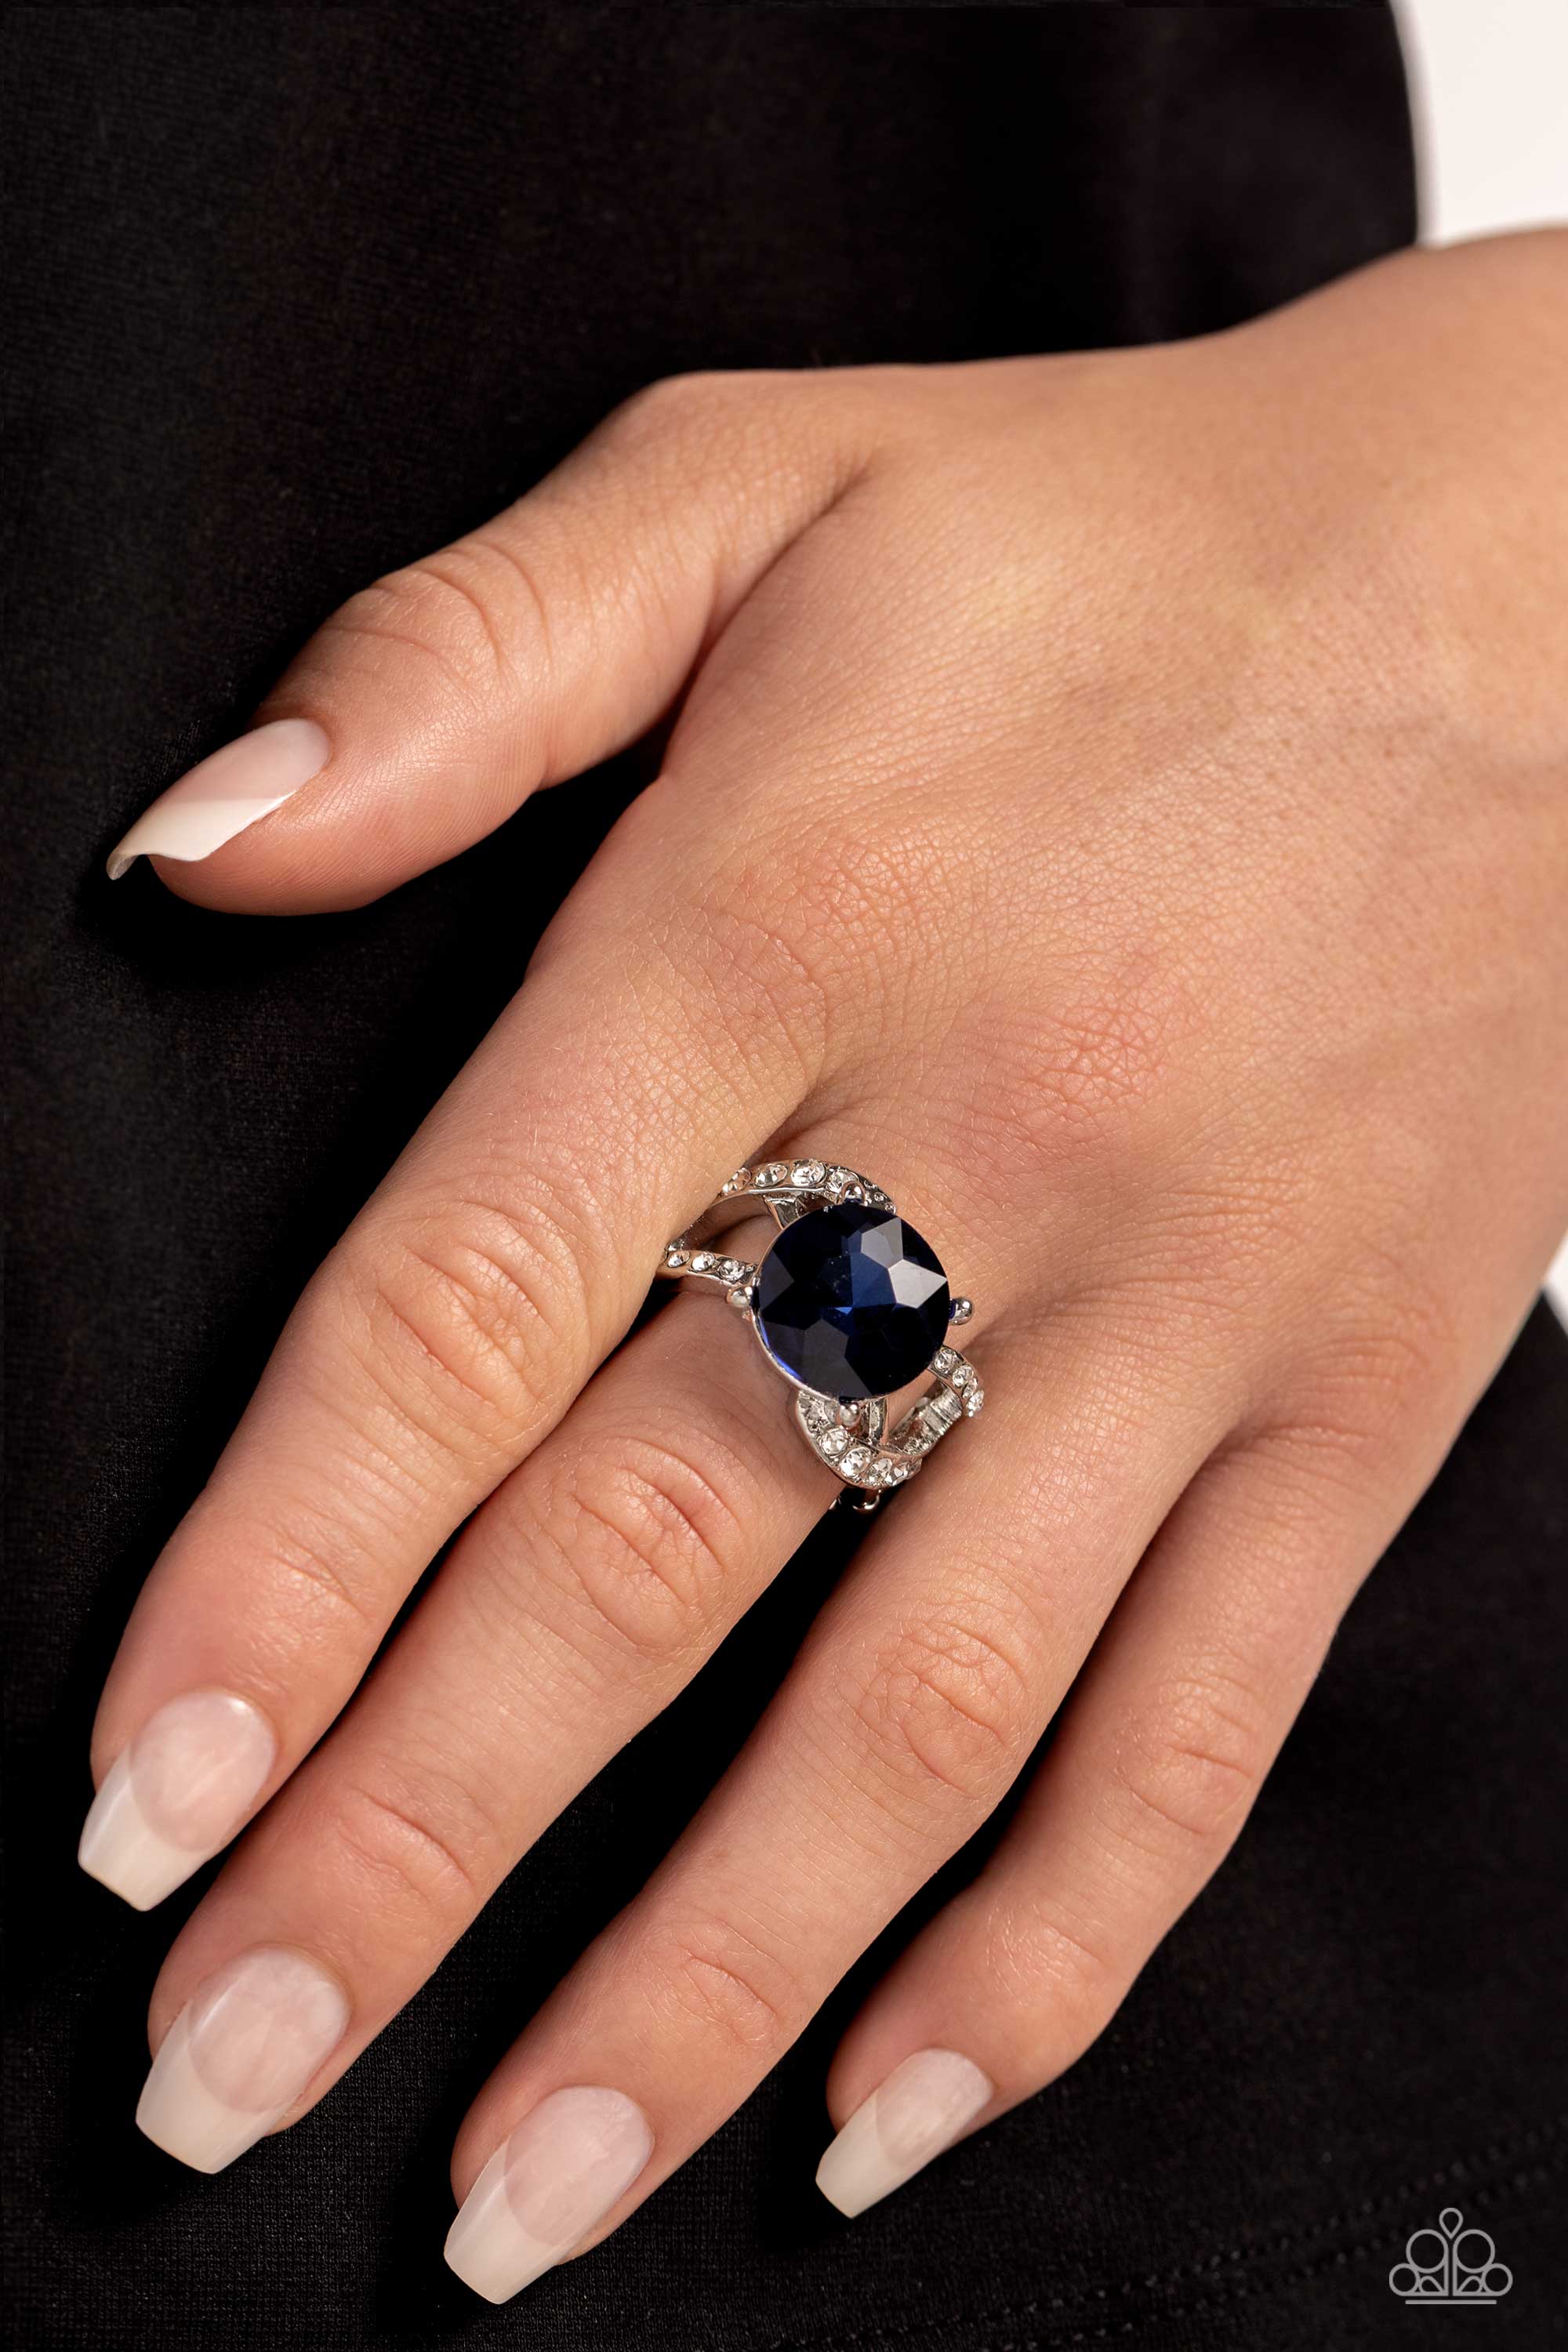 Scintillating Swirl Blue Rhinestone Ring - Paparazzi Accessories- lightbox - CarasShop.com - $5 Jewelry by Cara Jewels